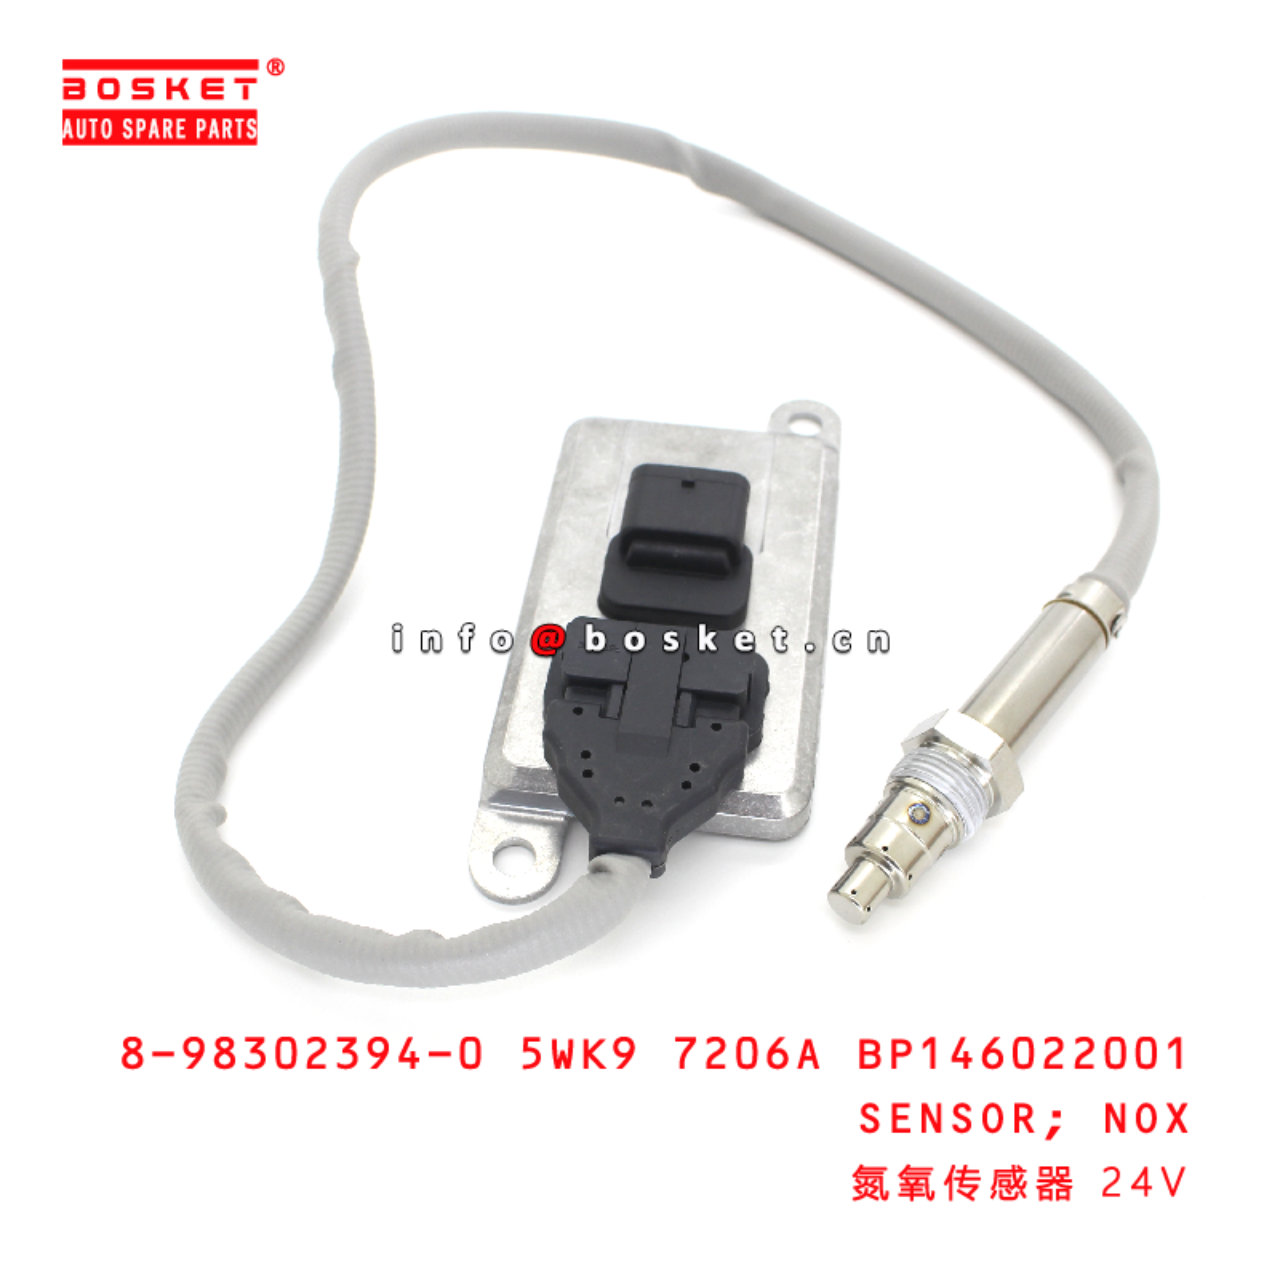 8-98302394-0 5WK9 7206A BP146022001 Nox Sensor suitable for ISUZU 8983023940